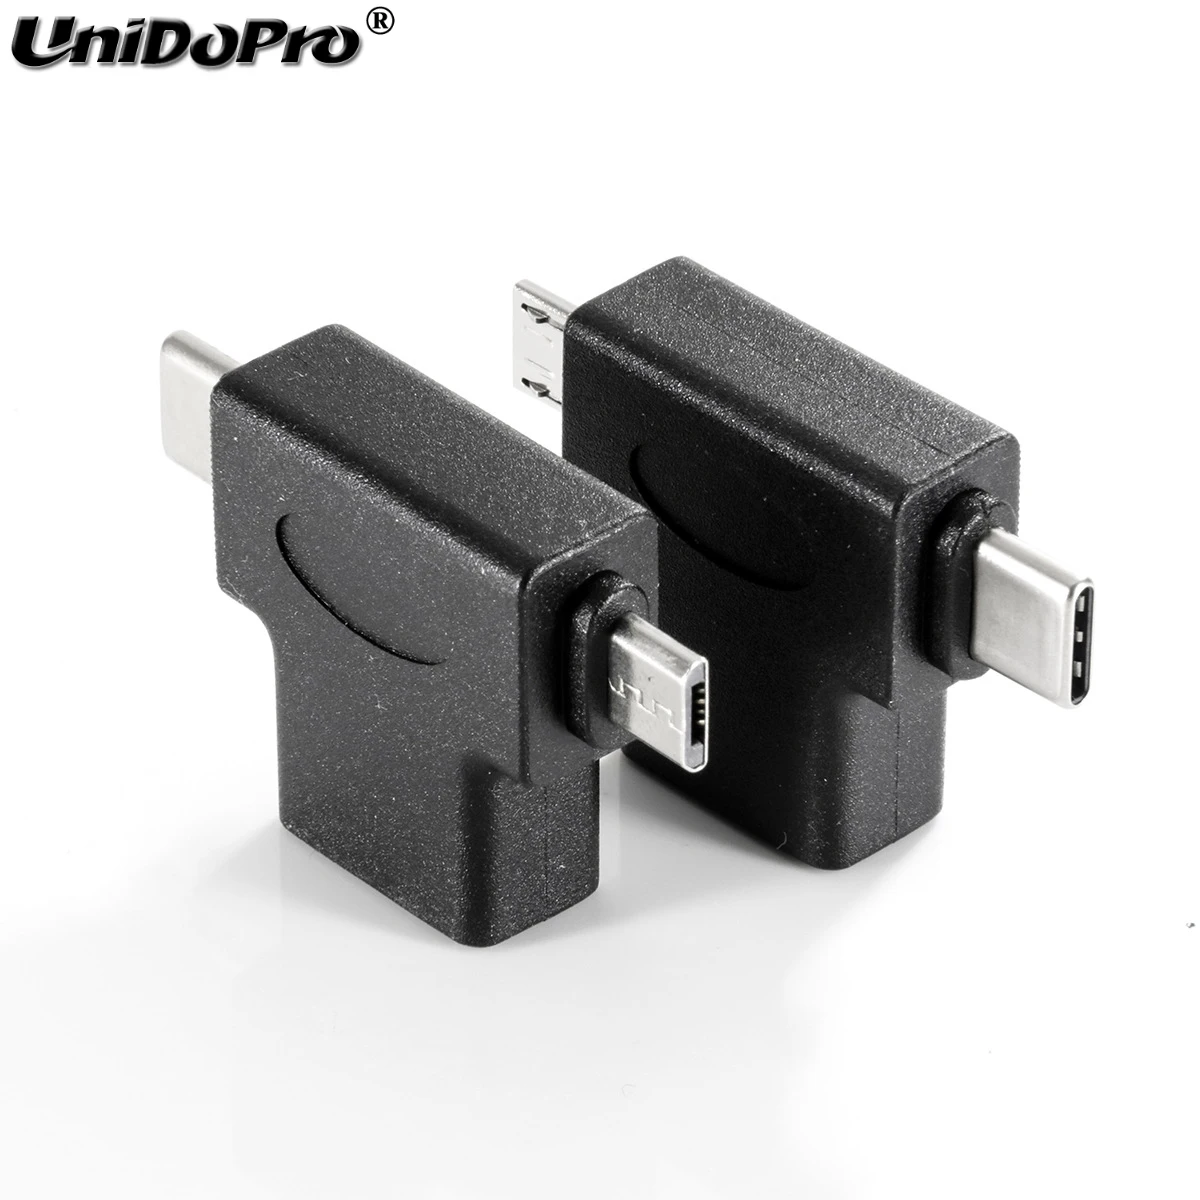 USB OTG Kabel kompatibel mit Huawei MediaPad M5 8.4 / M5 10.8 / M5 Pro / M5 lite Type C USB C Host Kabel, 15cm OTG Adapter 